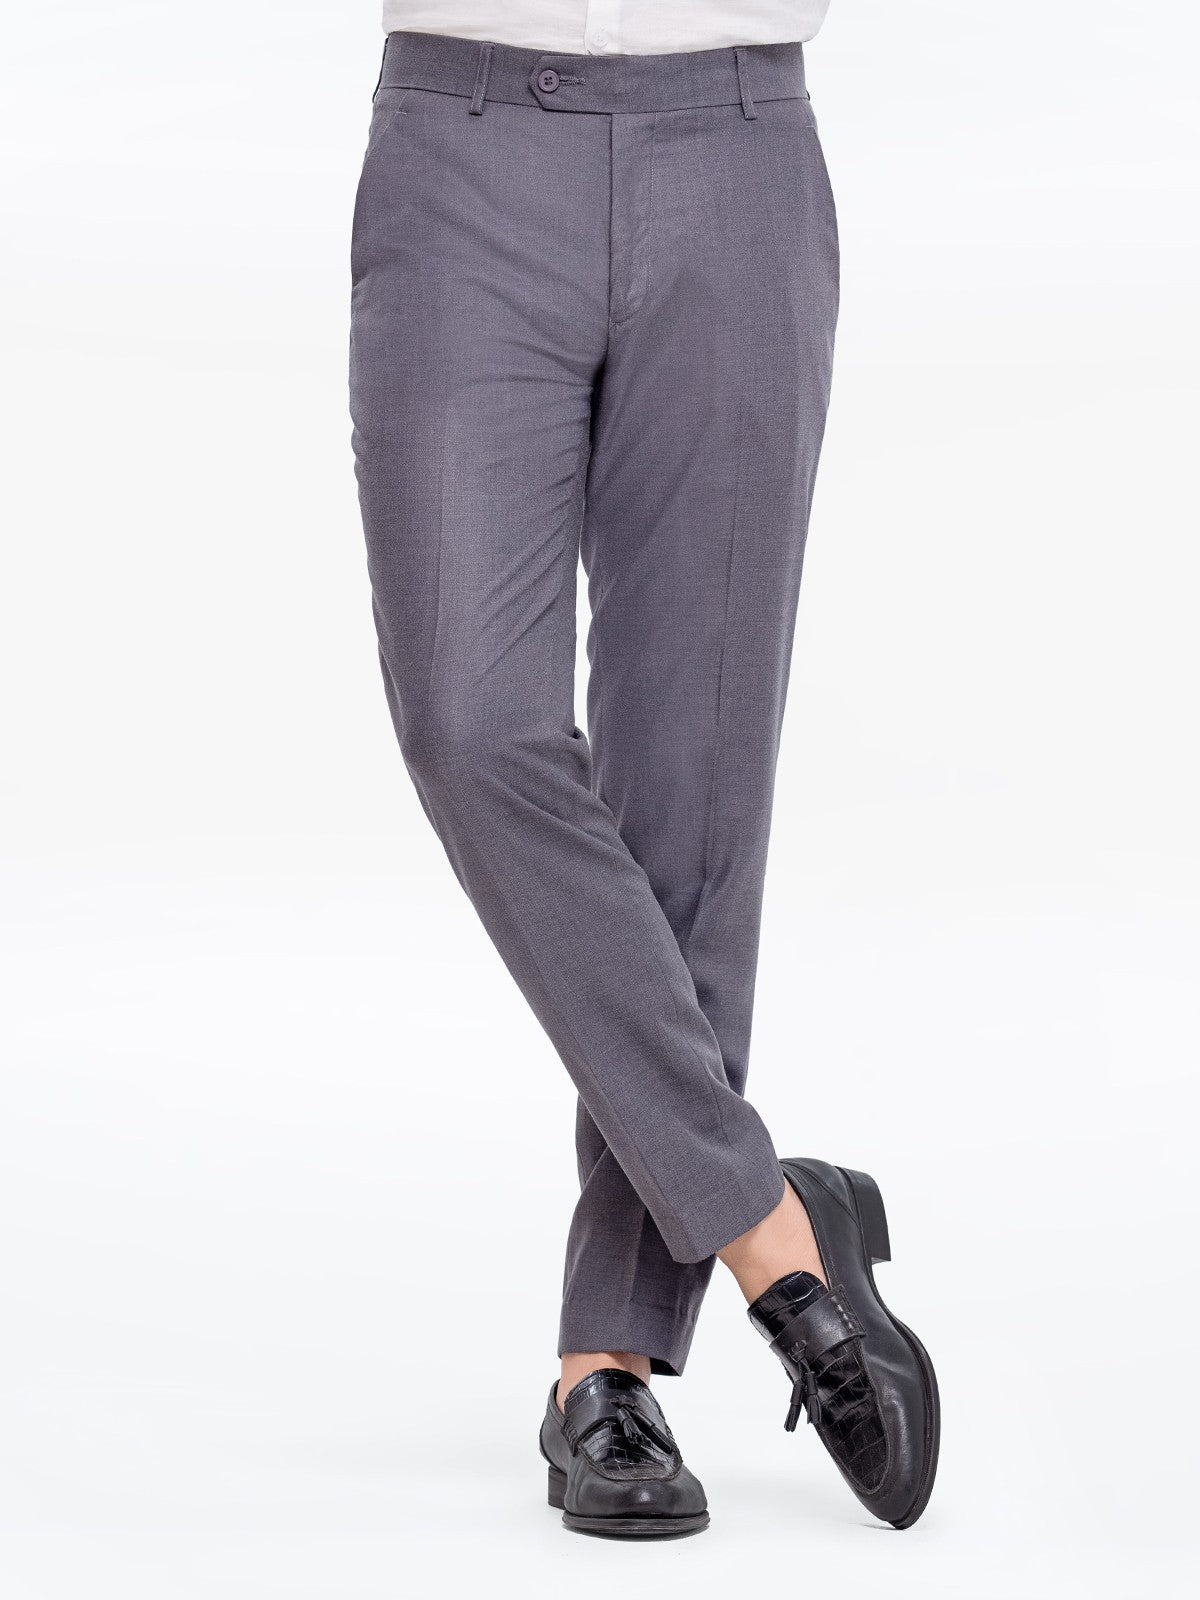 Grey Formal pants for Men